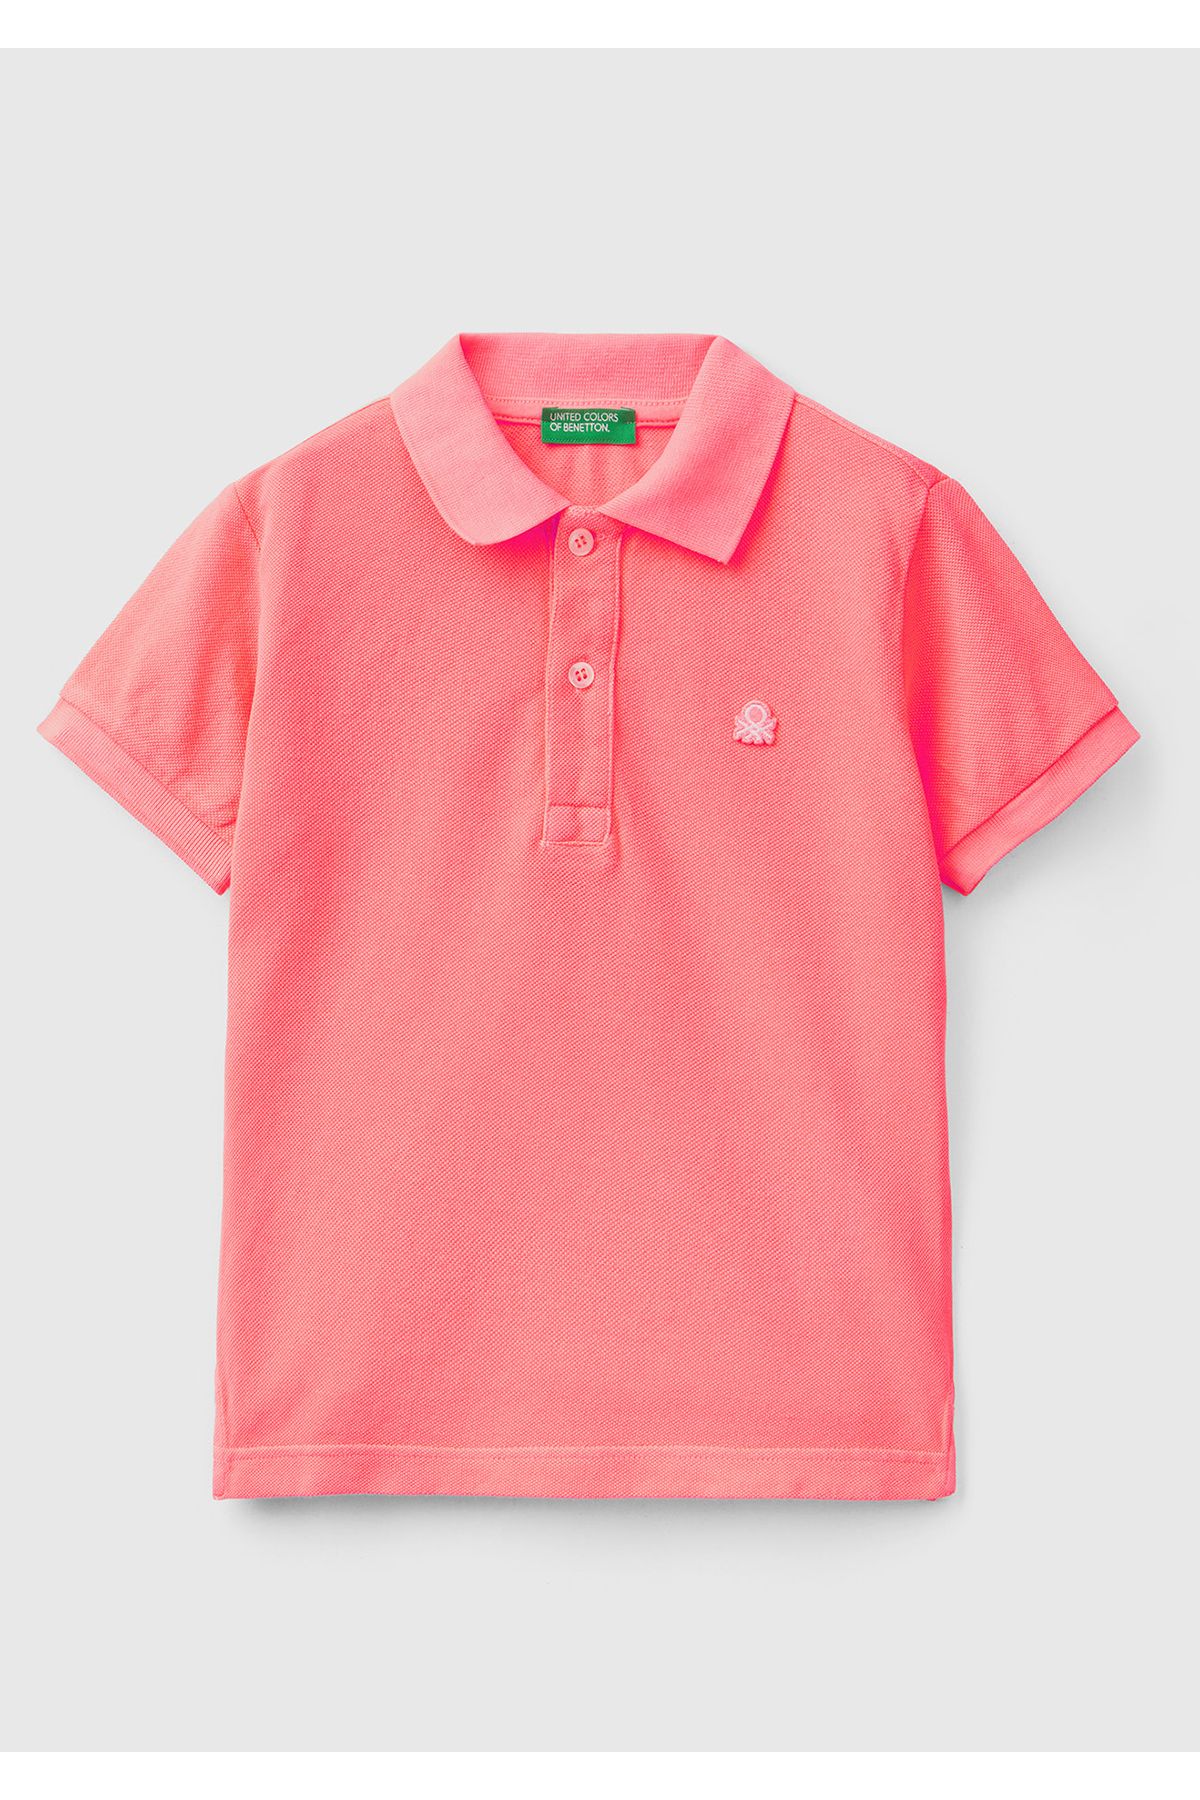 United Colors of Benetton Erkek Çocuk Pembe Logolu Neon Pike Polo T-Shirt